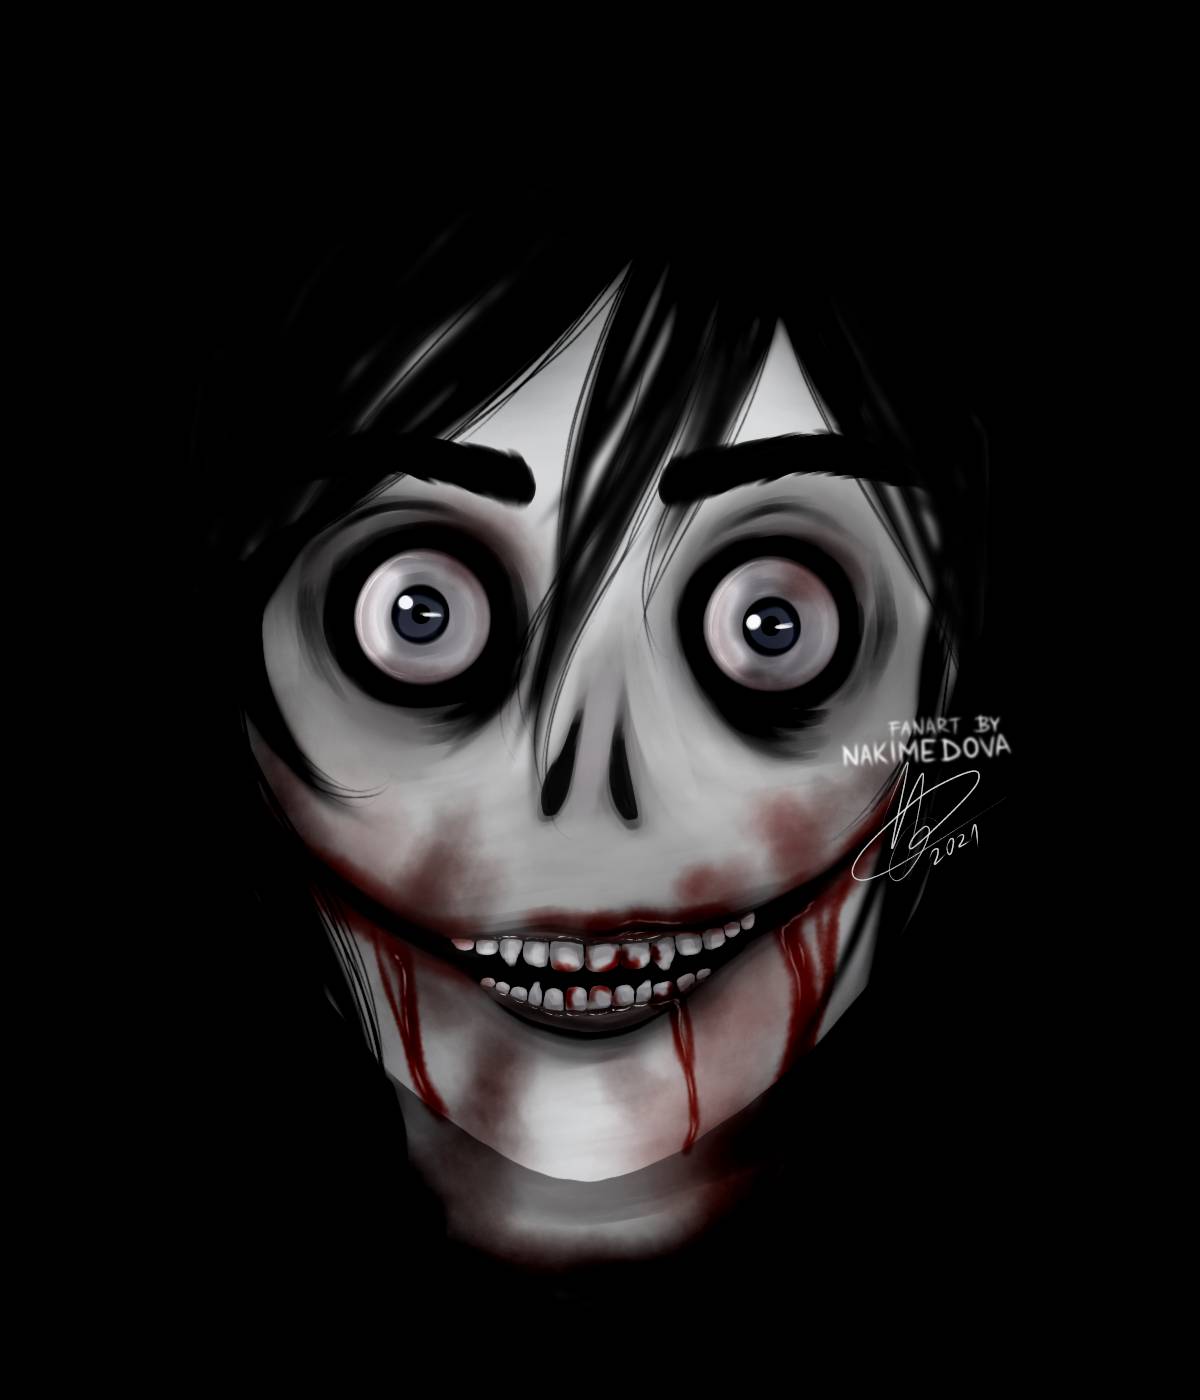 Jeff The Killer [Fan Art : Creepypasta ] by SeiiRiver on DeviantArt